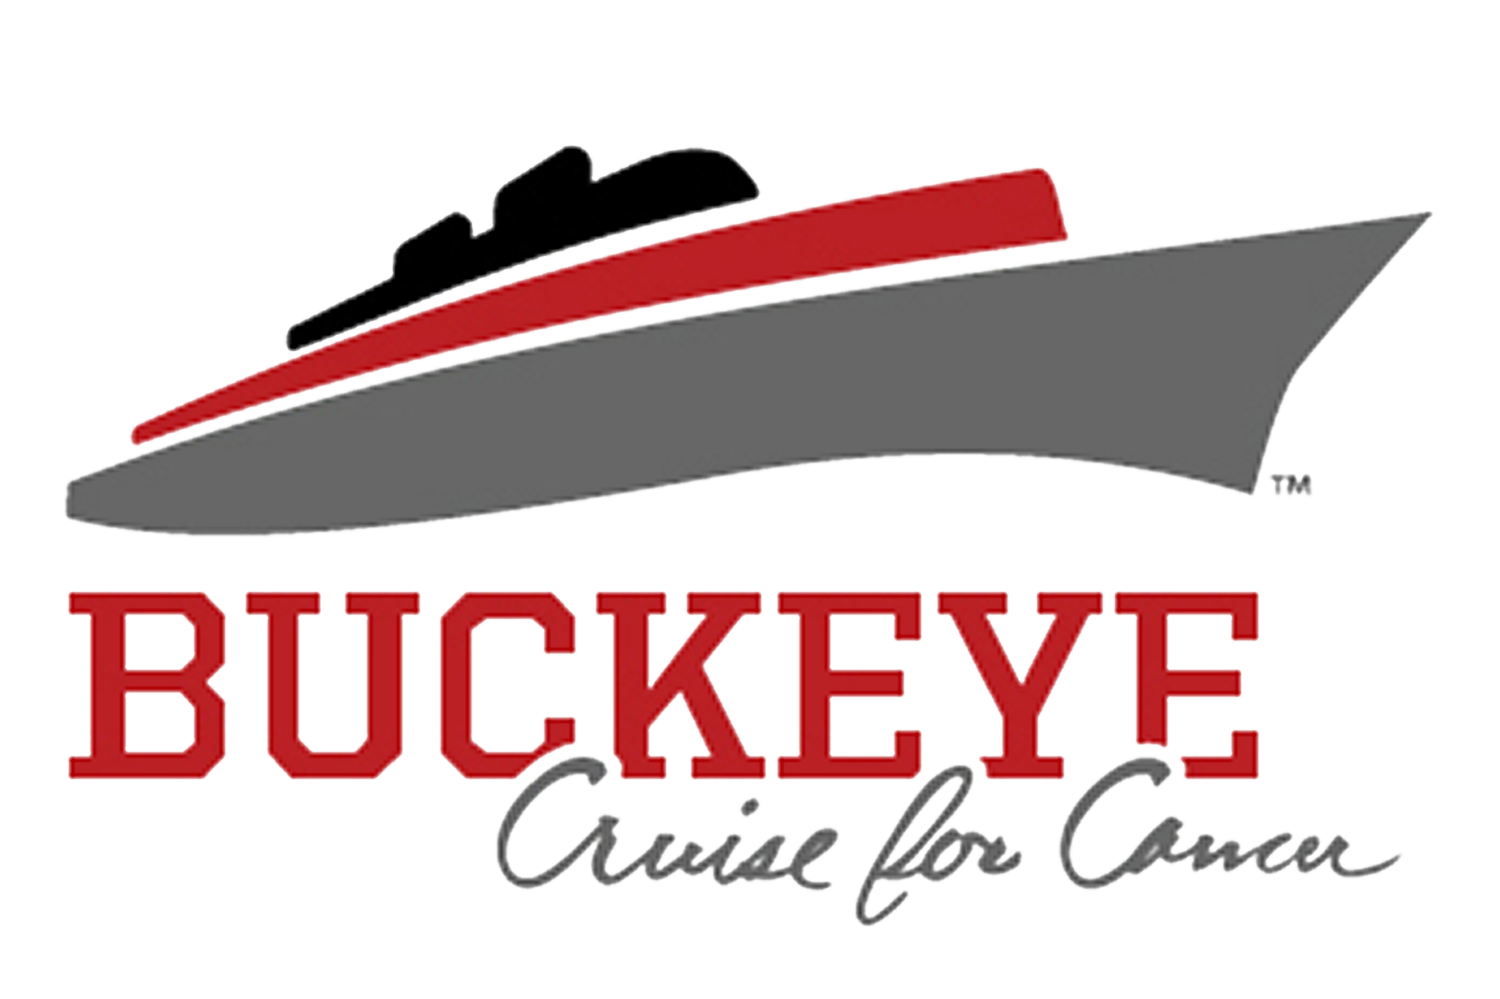  buckeye cruise for cancer the ohio eggfest